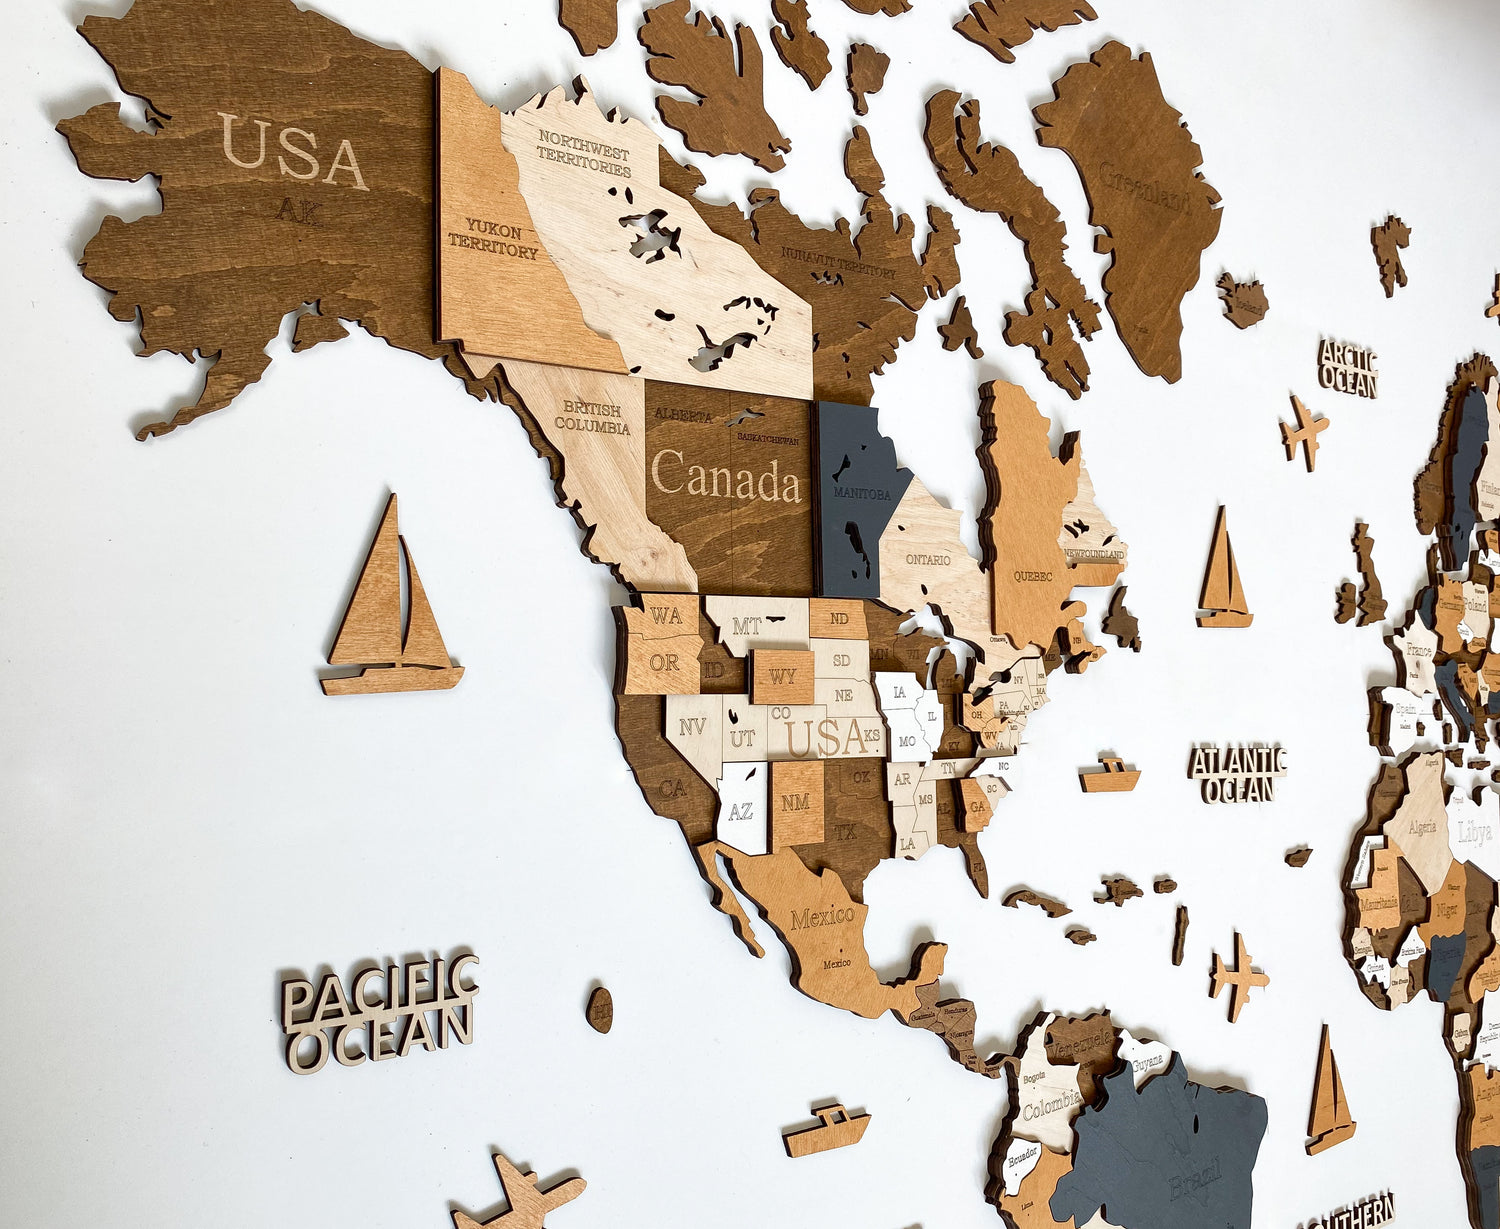 Weltkarte aus Holz